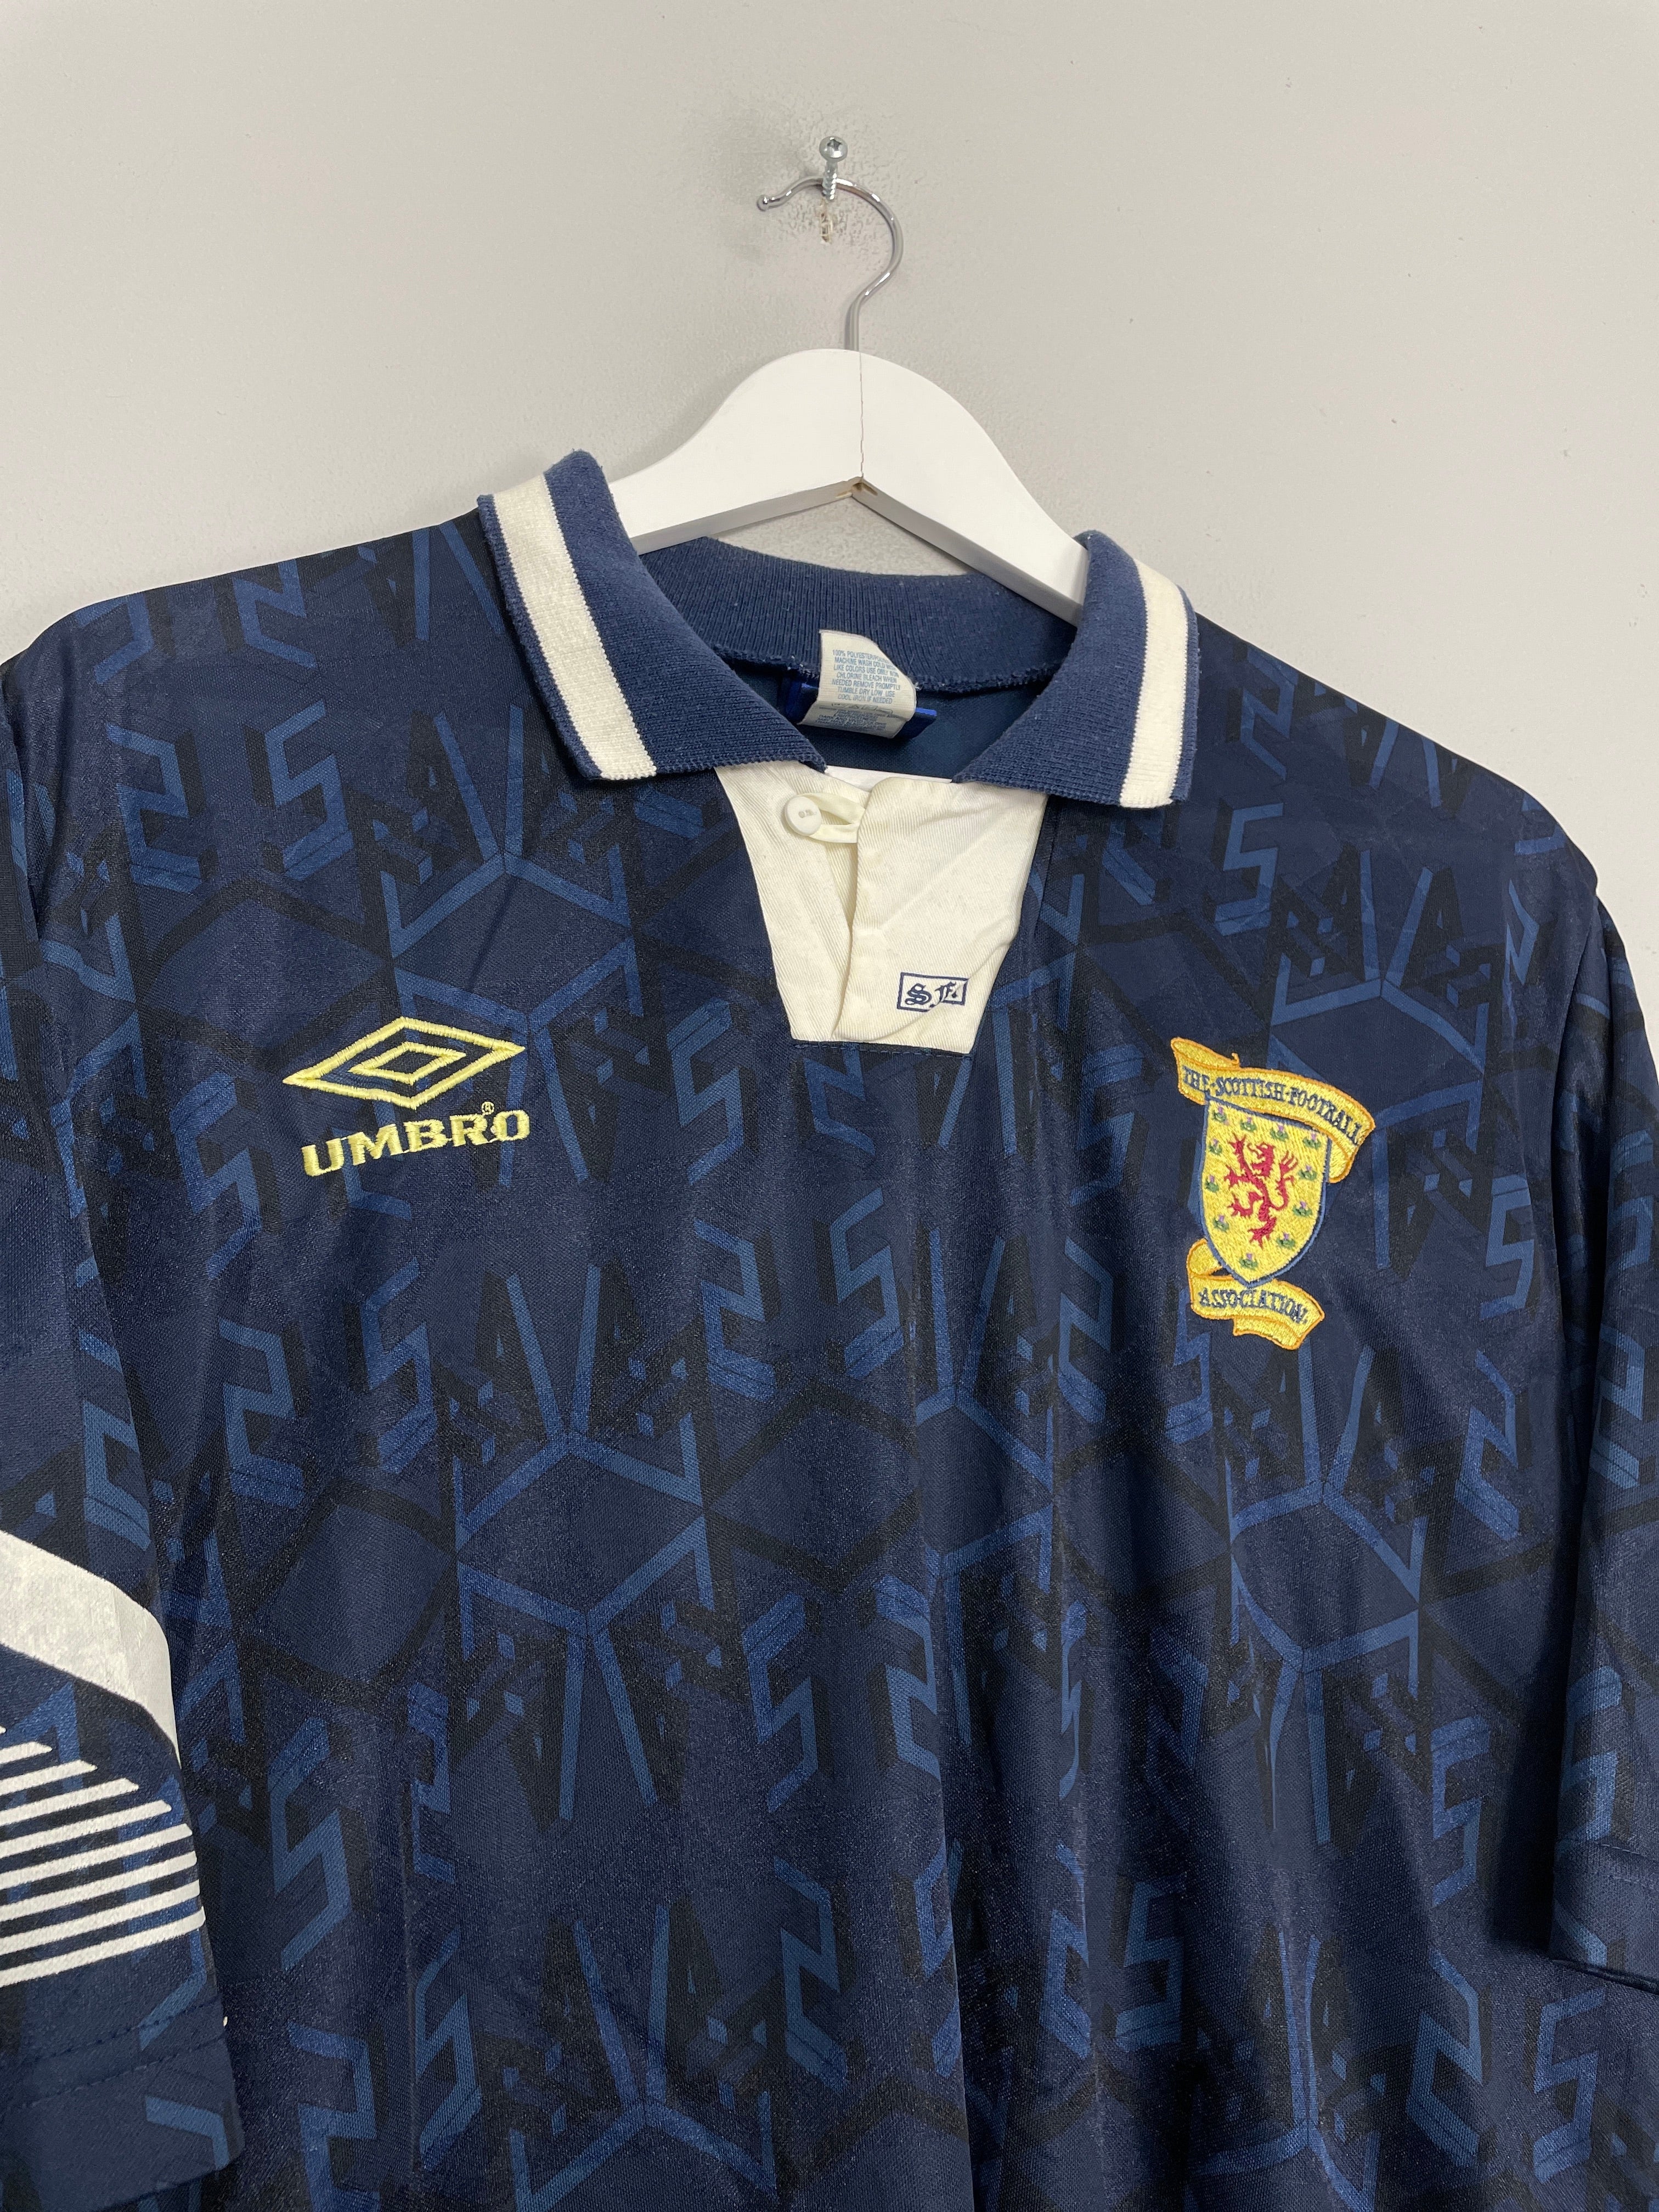 scotland 1992 shirt